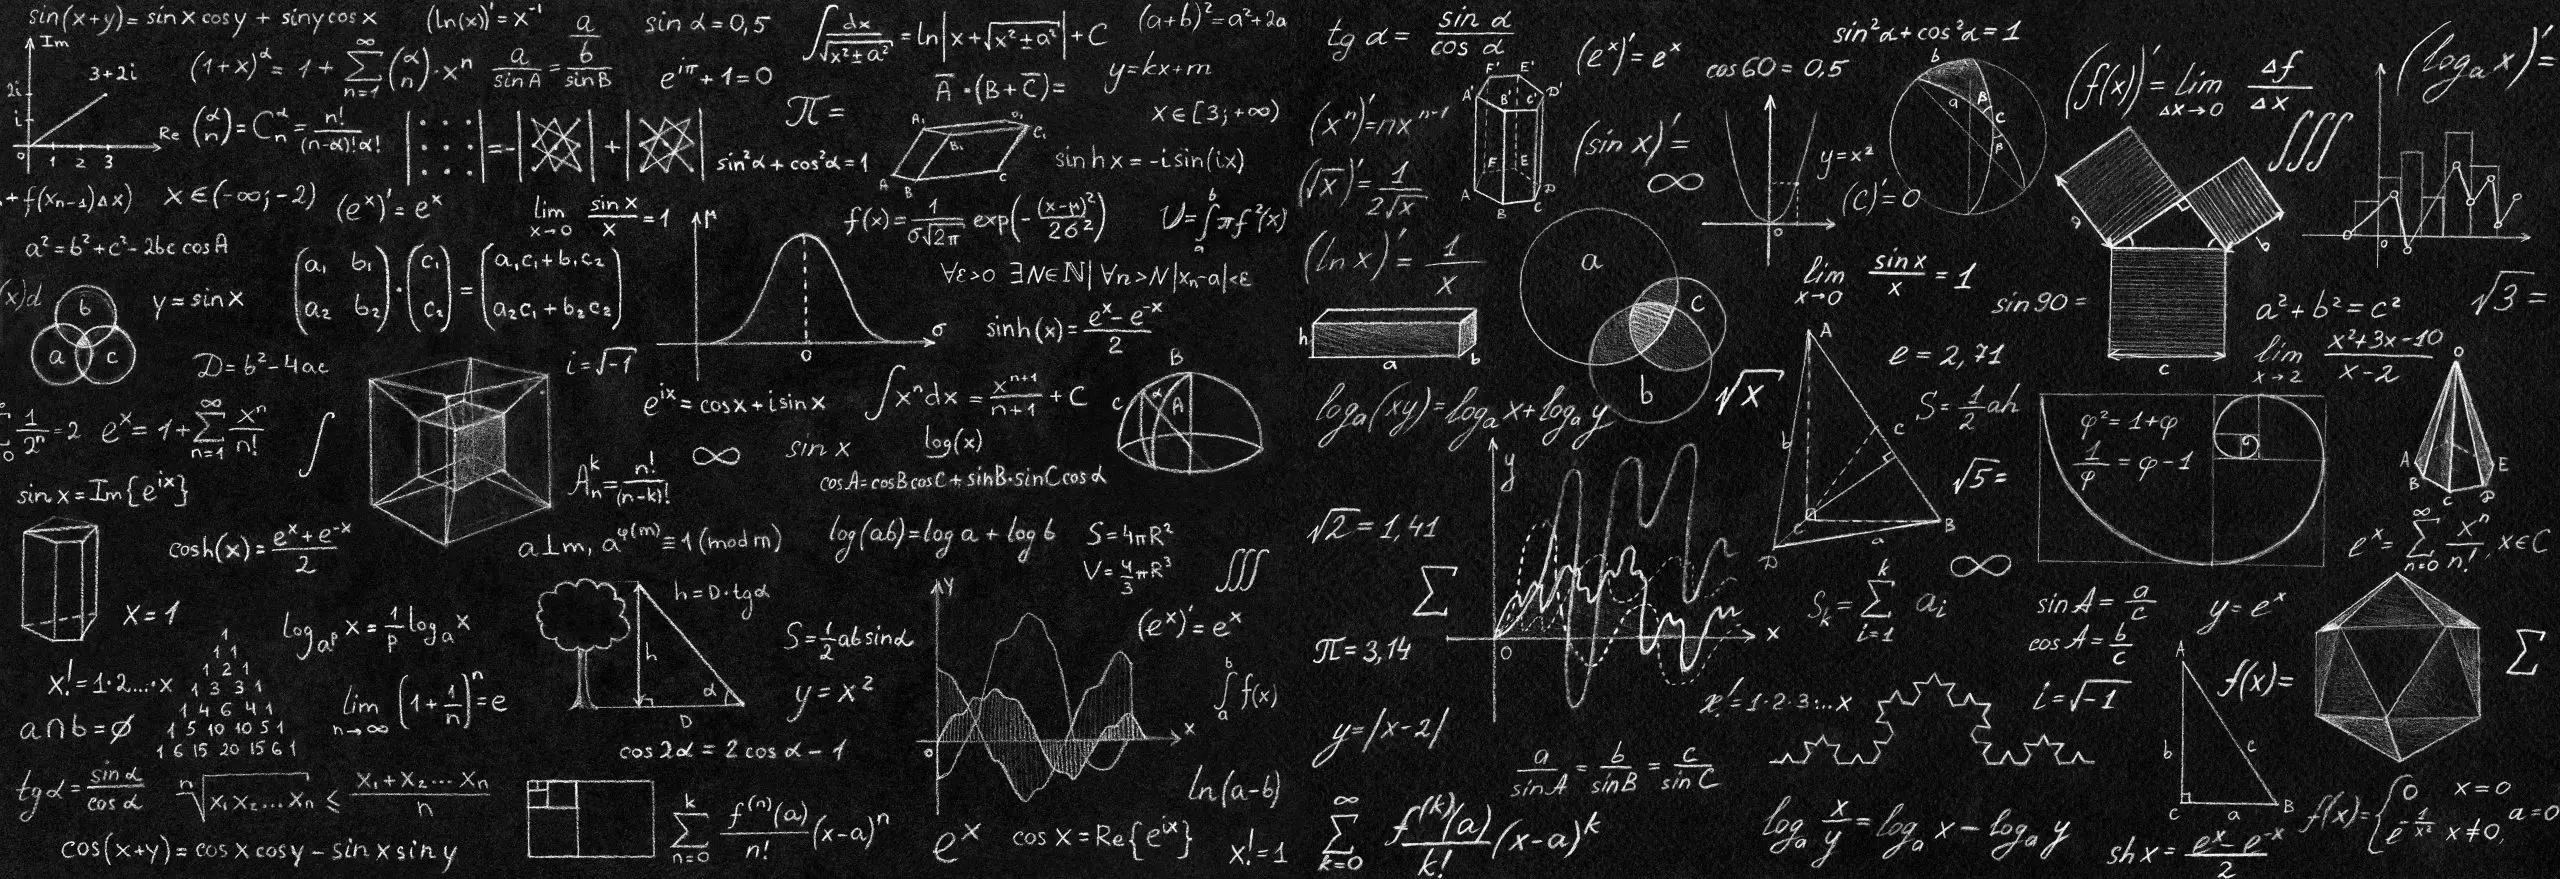 Blackboard inscribed with scientific formulas and calculations i